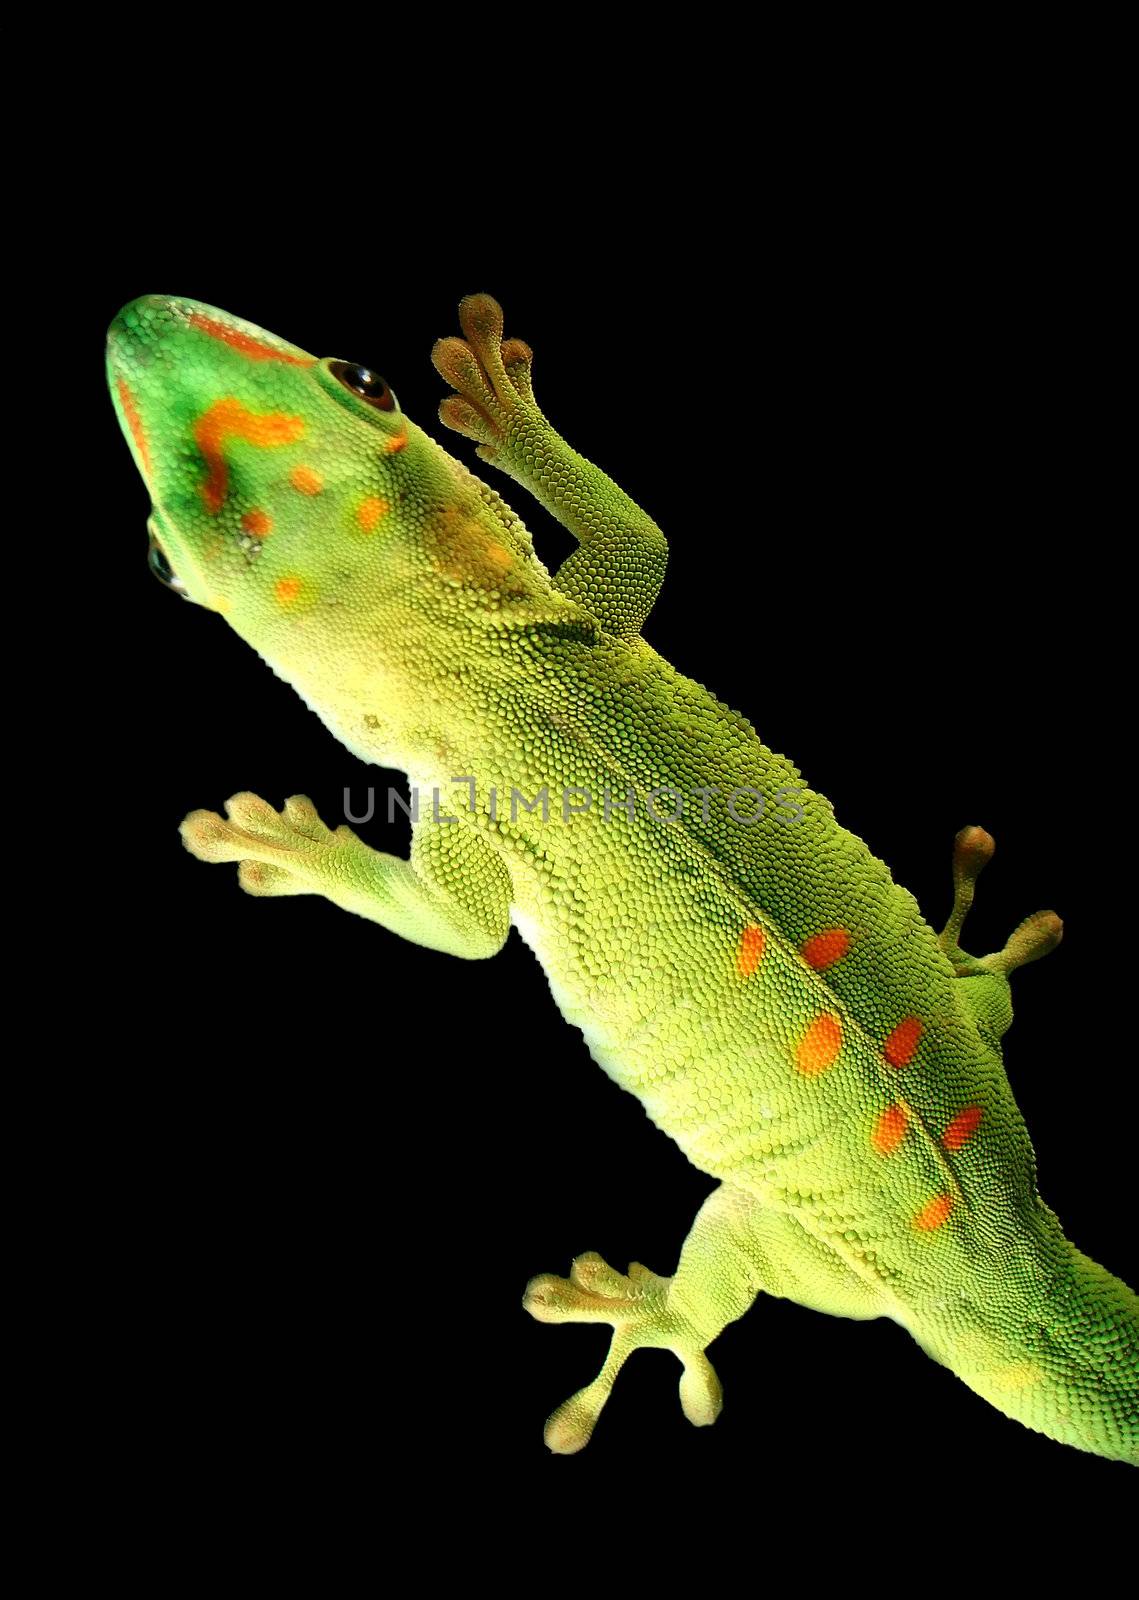 madagascar giant day gecko by amandaols